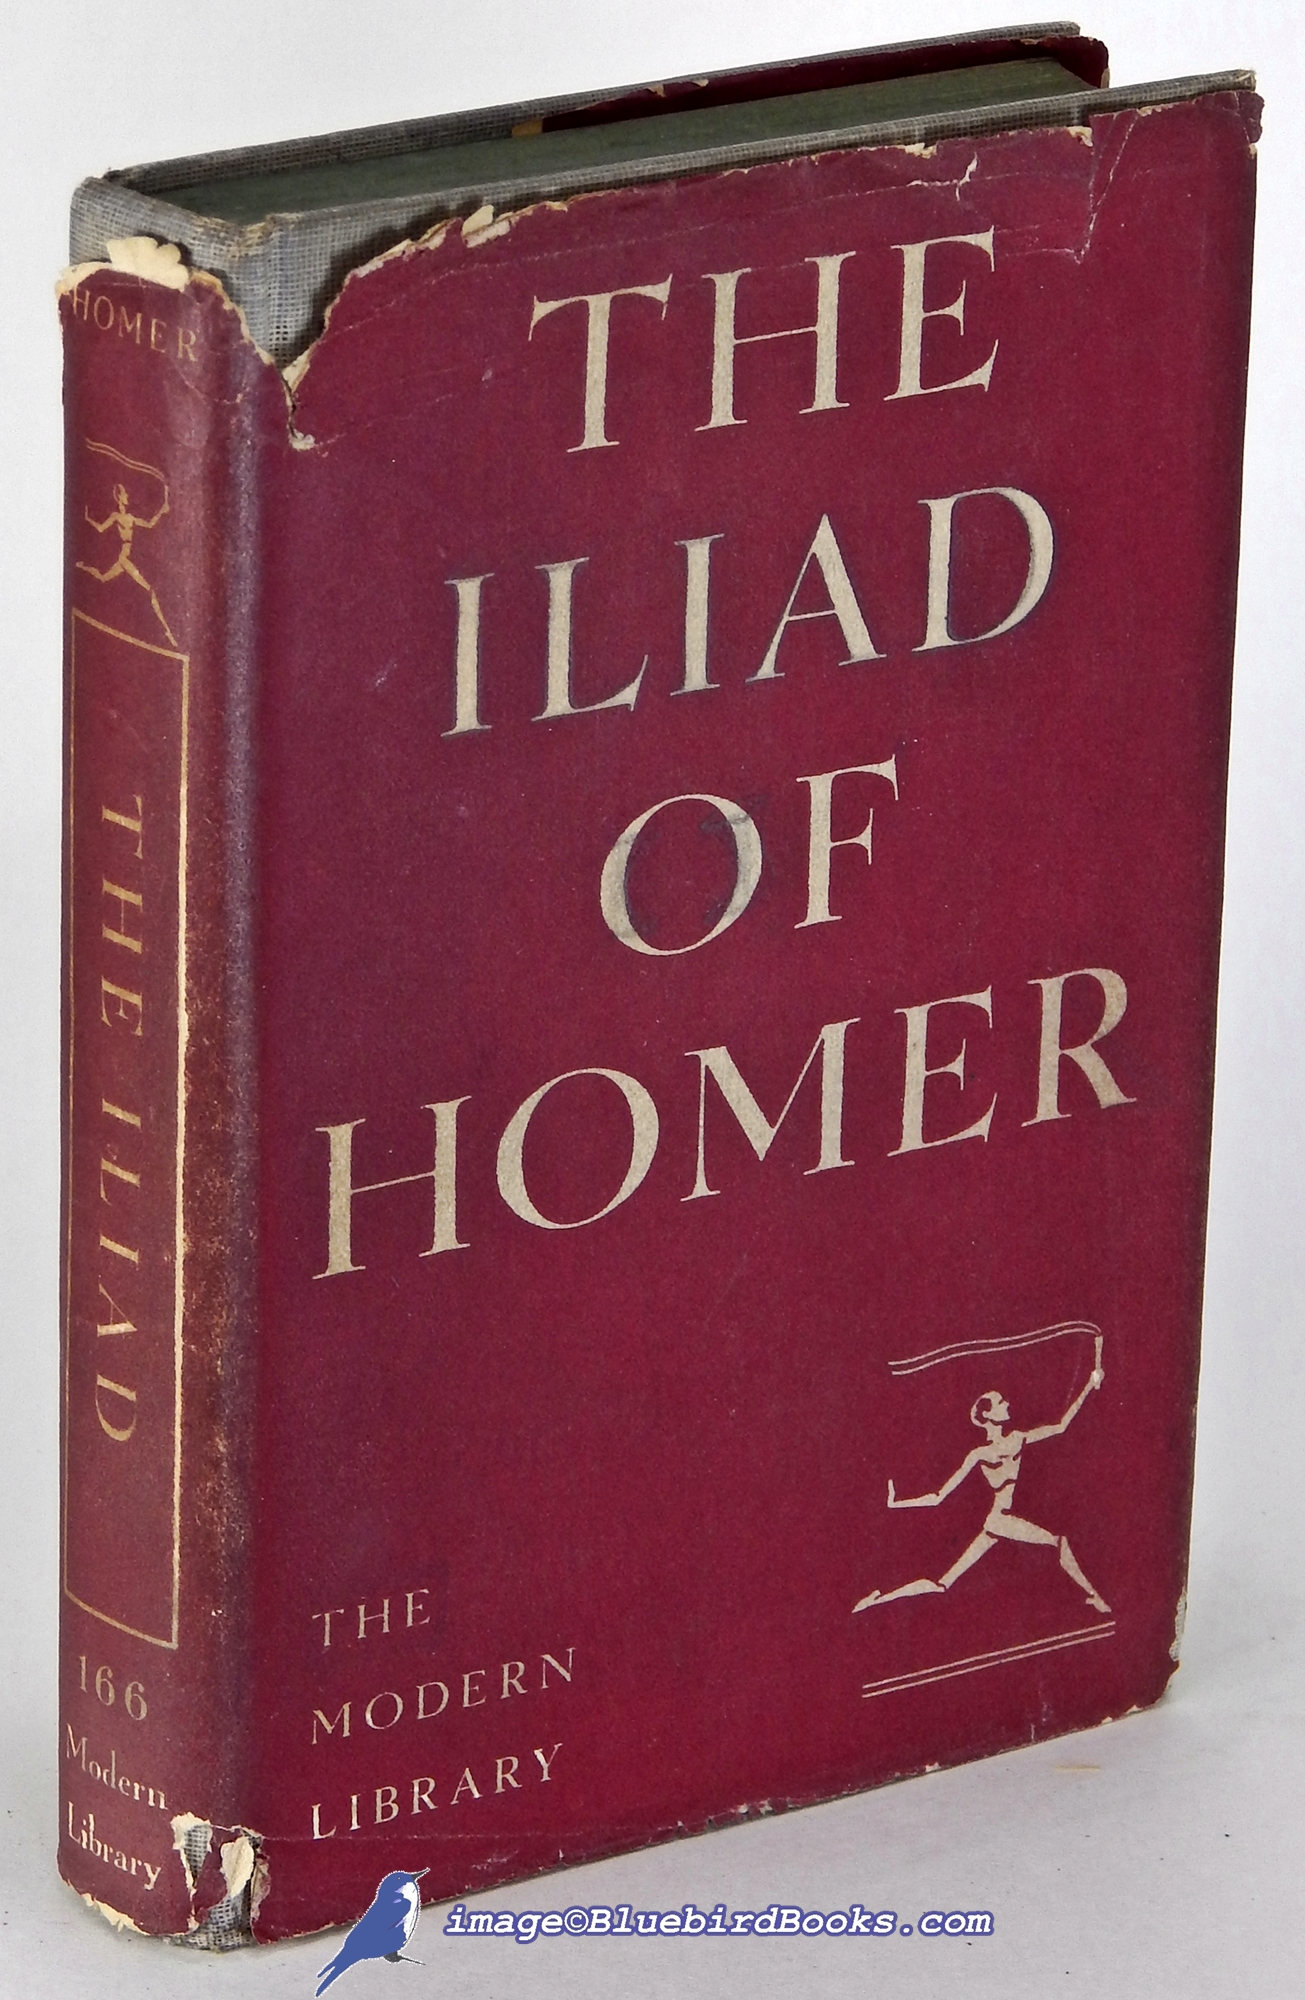 HOMER - The Iliad of Homer (Modern Library #166. 1)